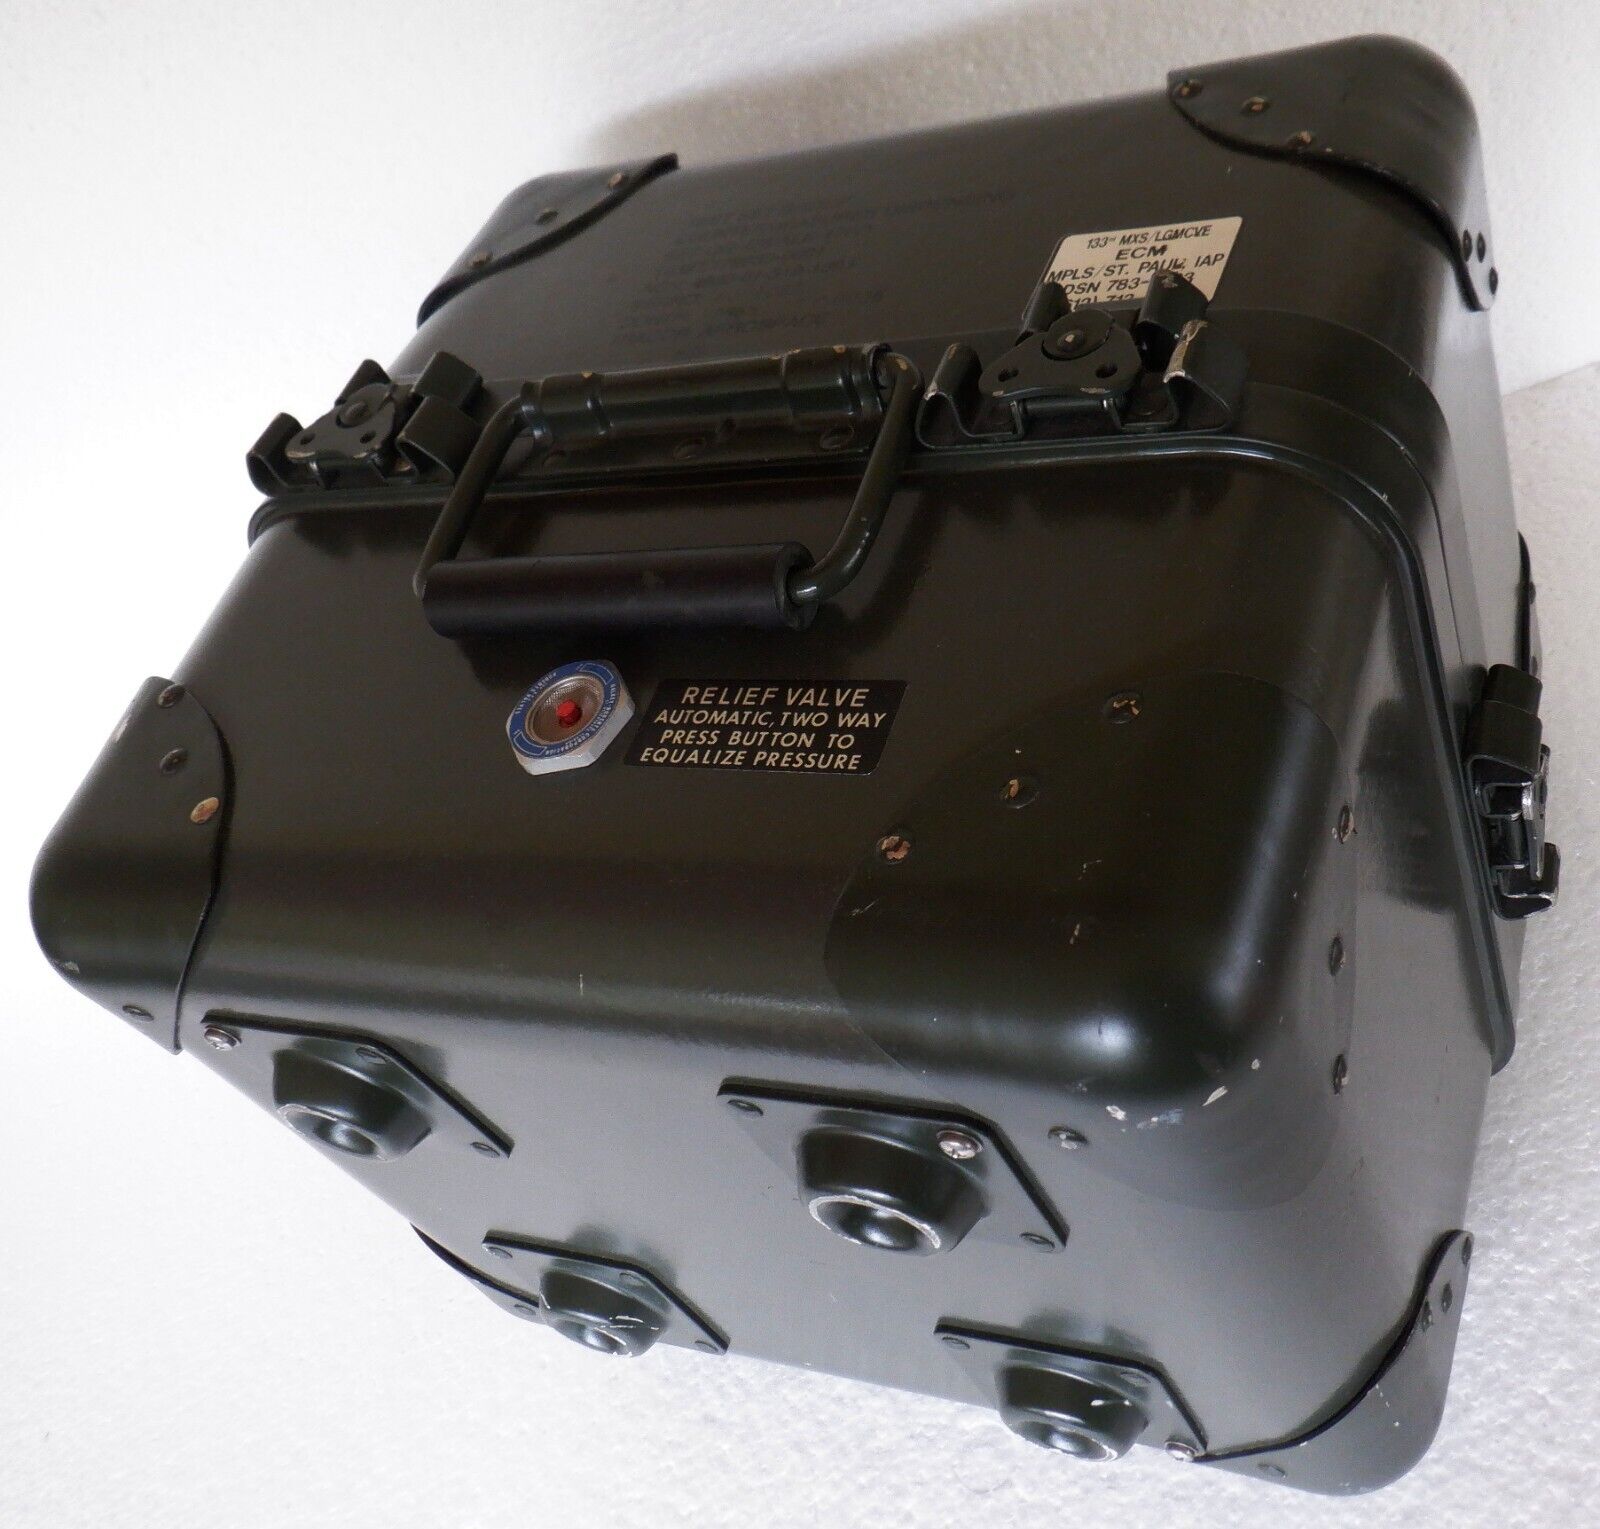 Skydyne 74284, Portable Military Electronics Case